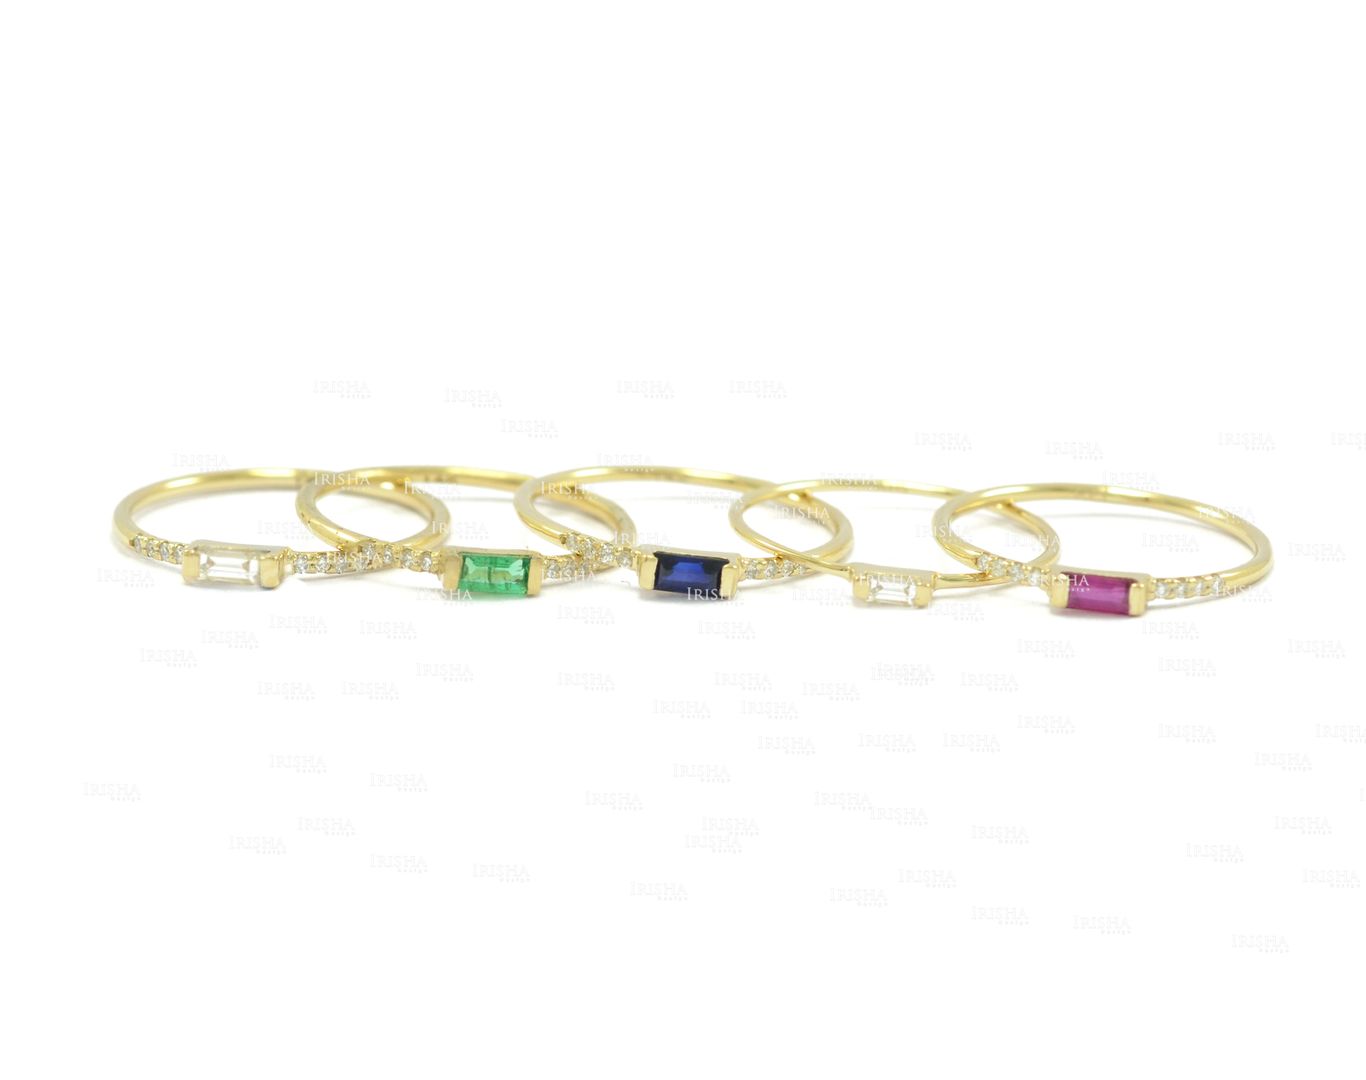 Genuine Diamond/Ruby/Emerald/Sapphire 5 Stacking Rings 14K Gold Jewelry Set